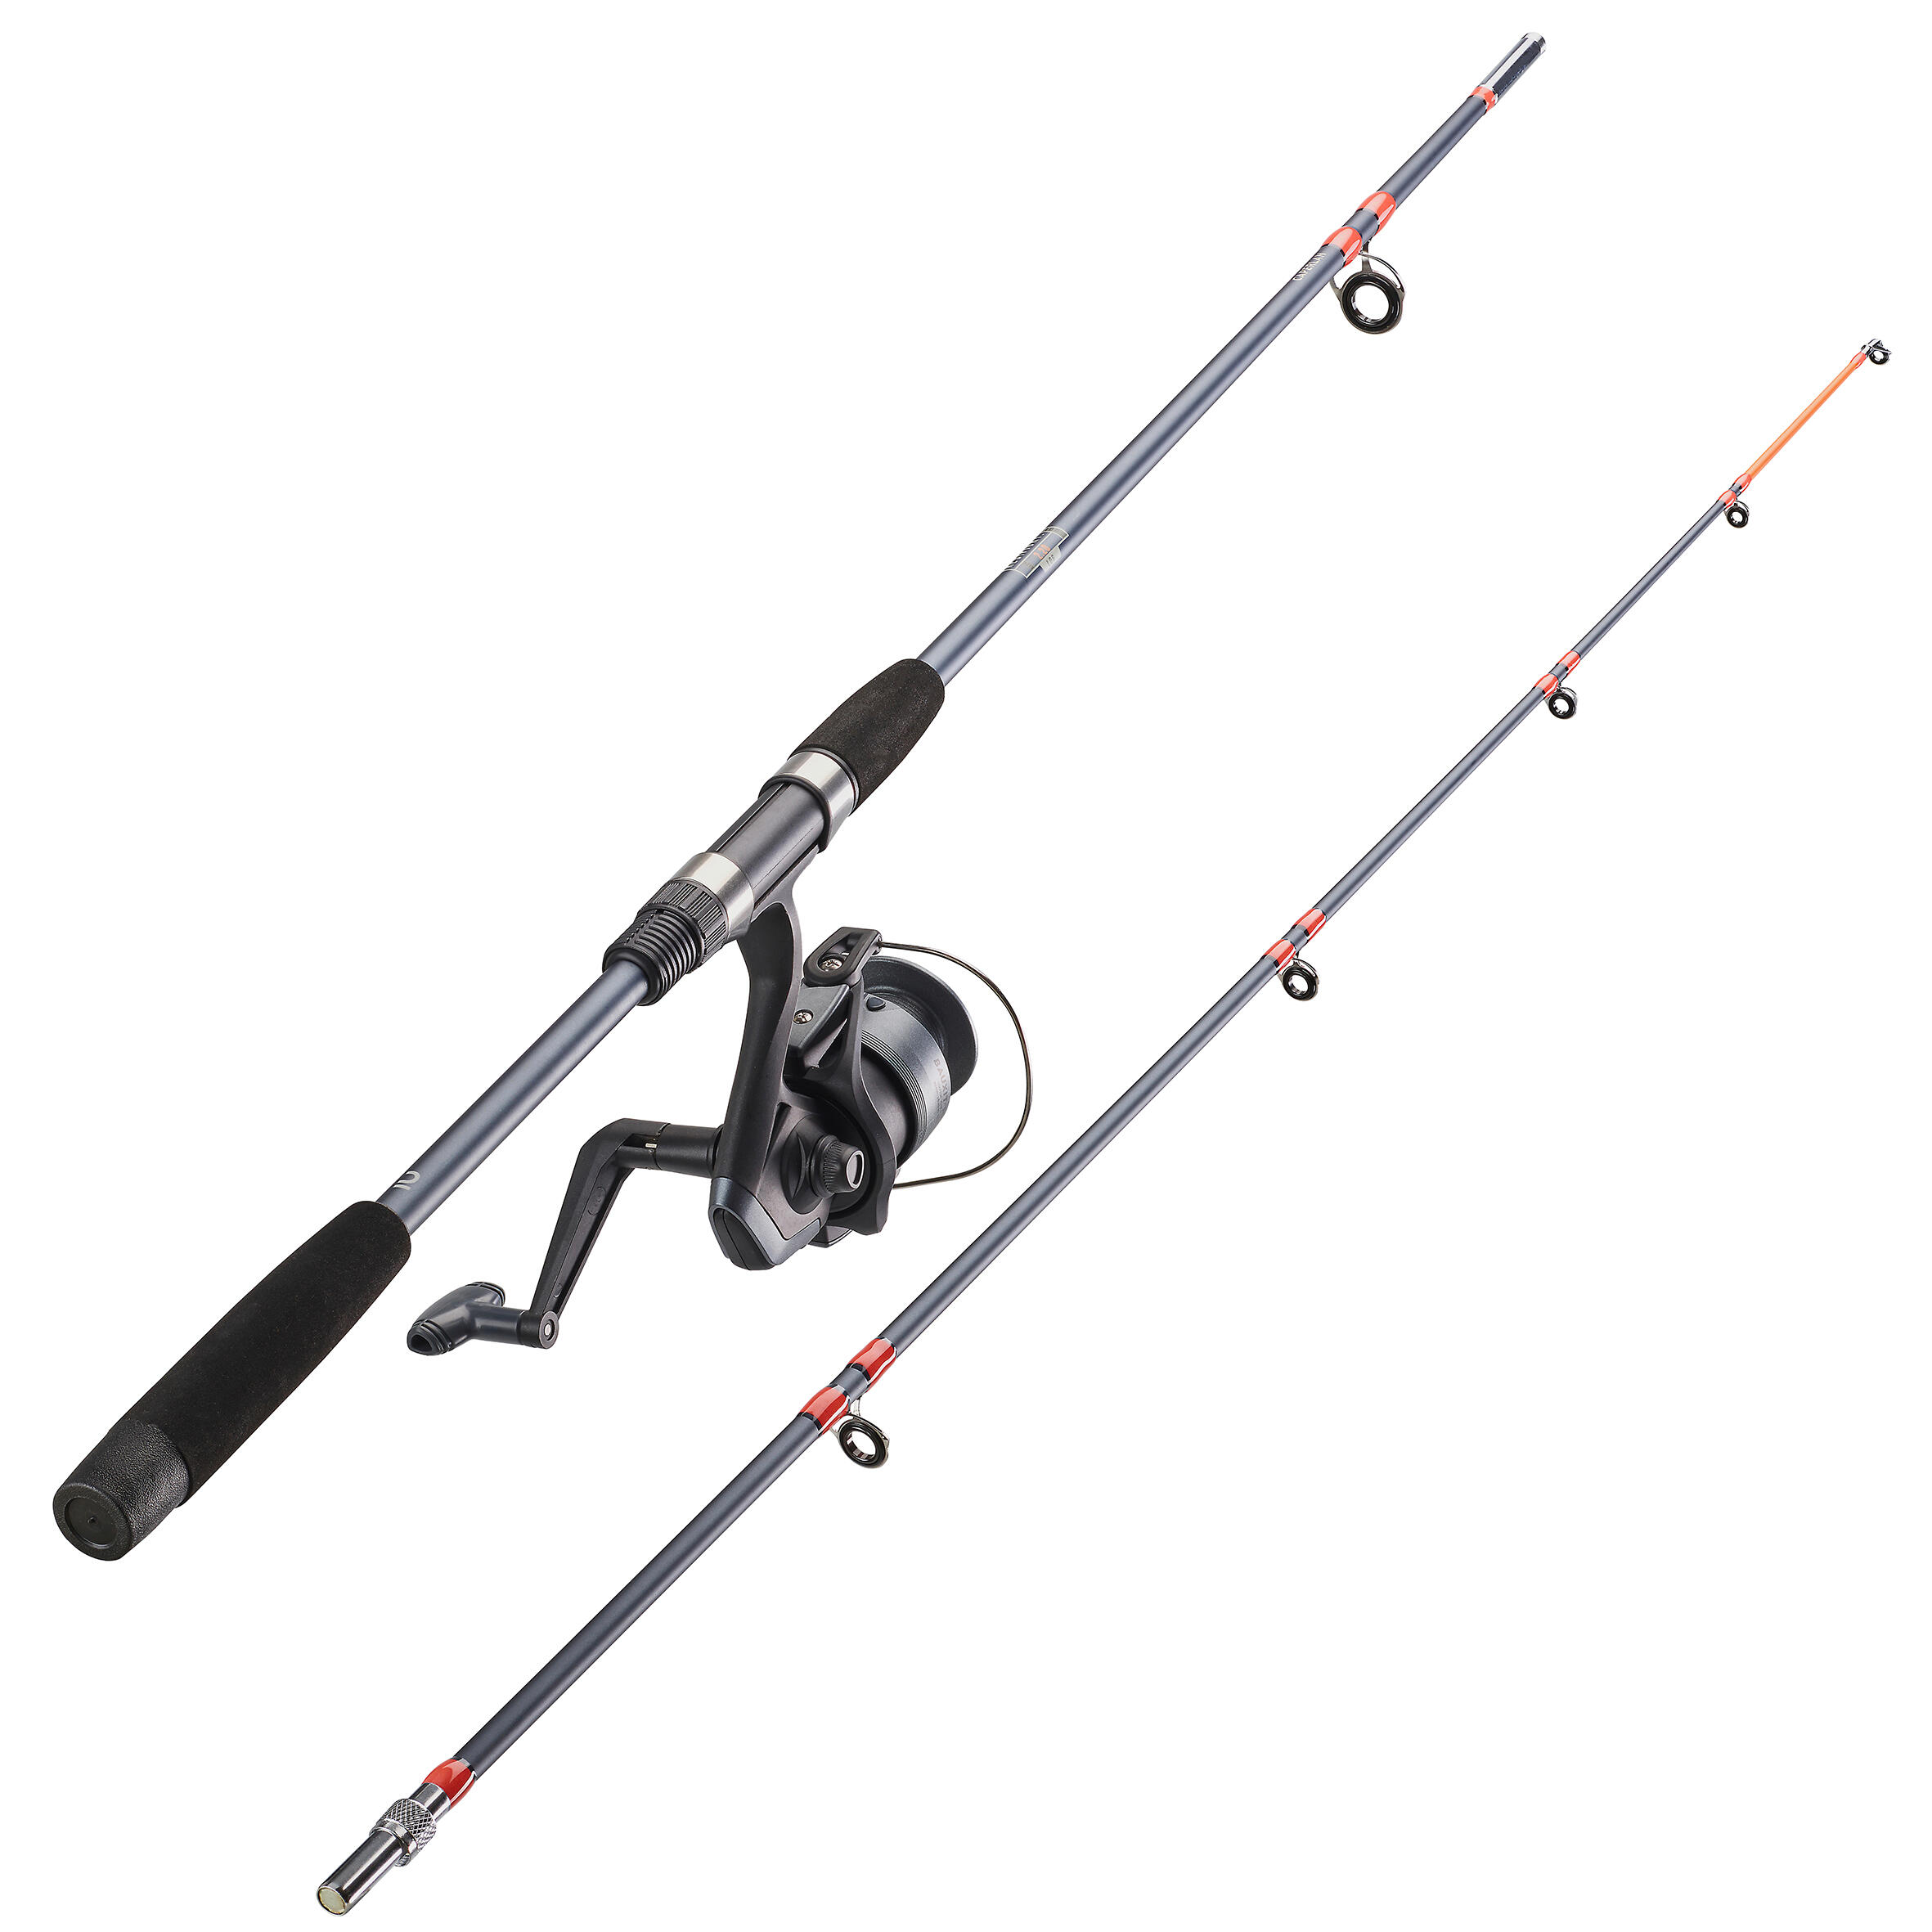 Carp fishing spod rod XTREM900 13' - Decathlon